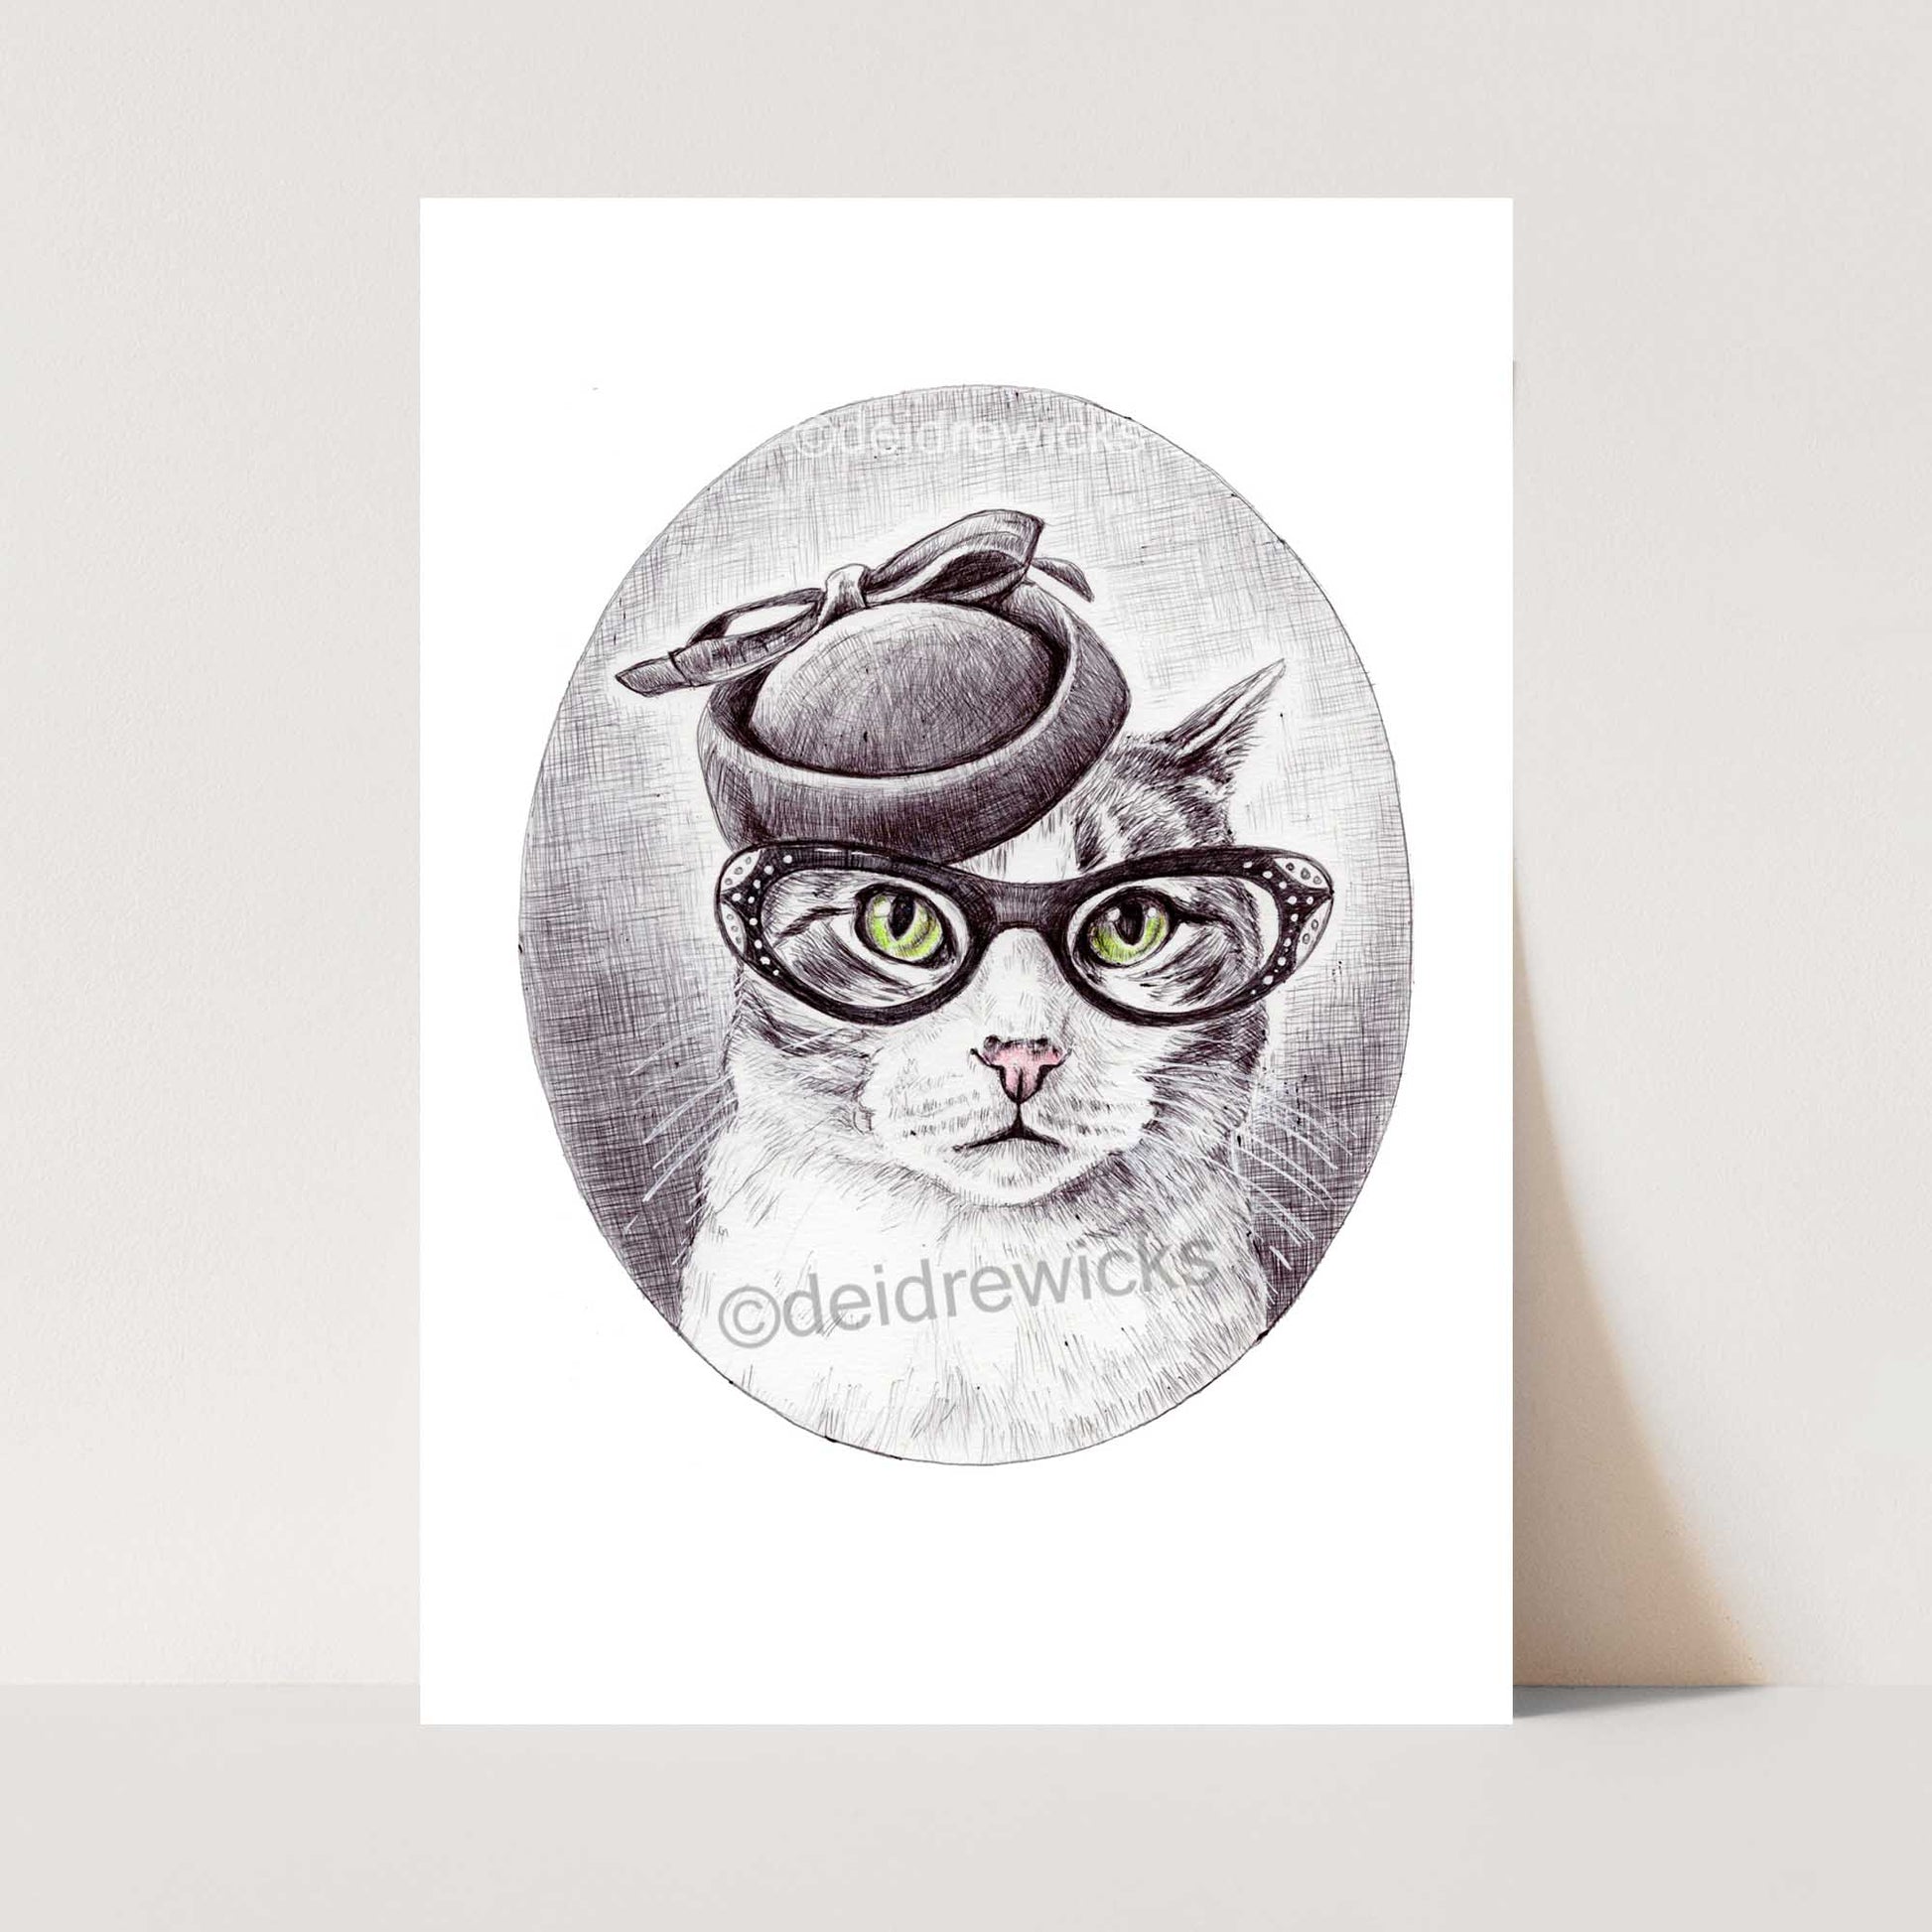 Ballpoint pen print of a stylish cat wearing a vintage pill box hat and cat eye glasses. Art by Deidre Wicks